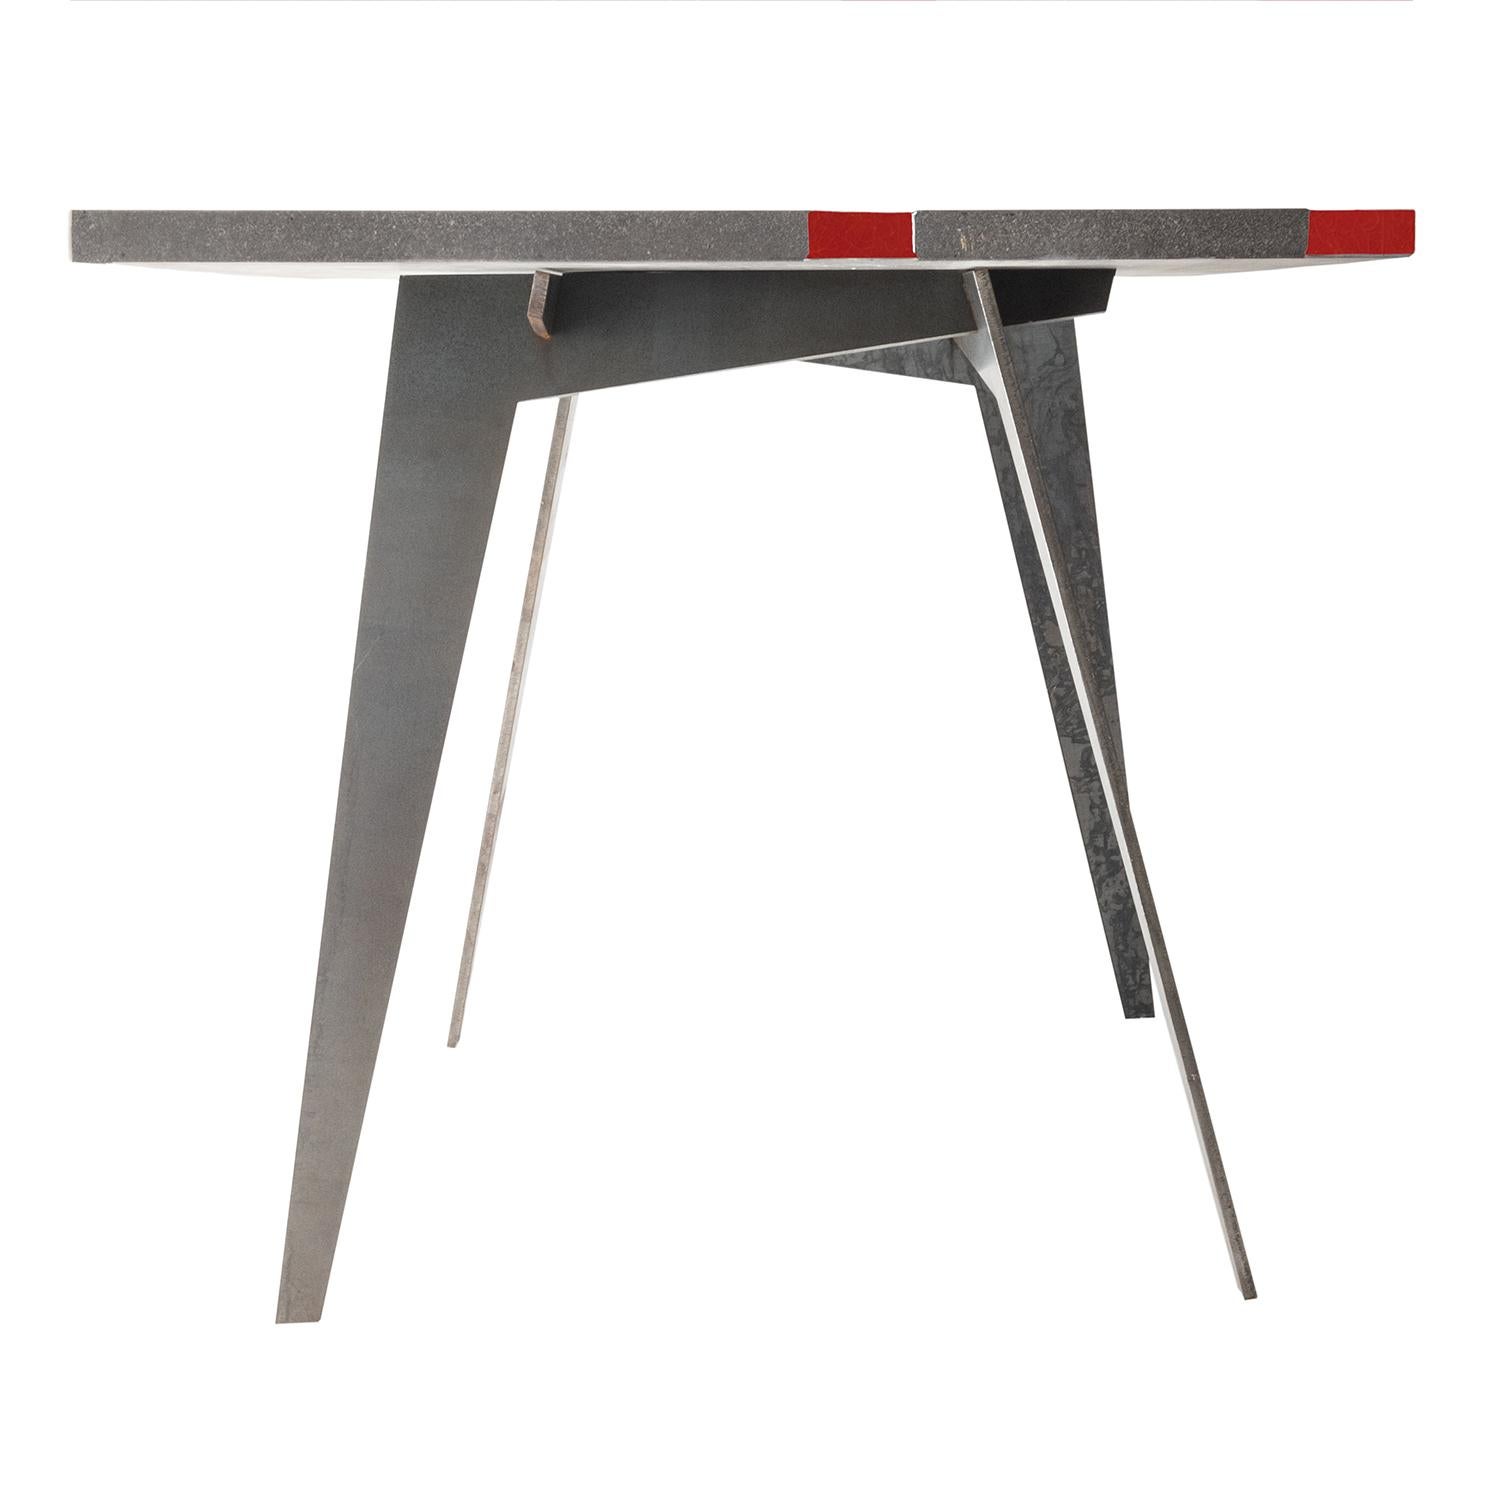 Italian Modern Outdoor Square Table in Lava Stone and Steel, Venturae v1 red, Filodifumo For Sale